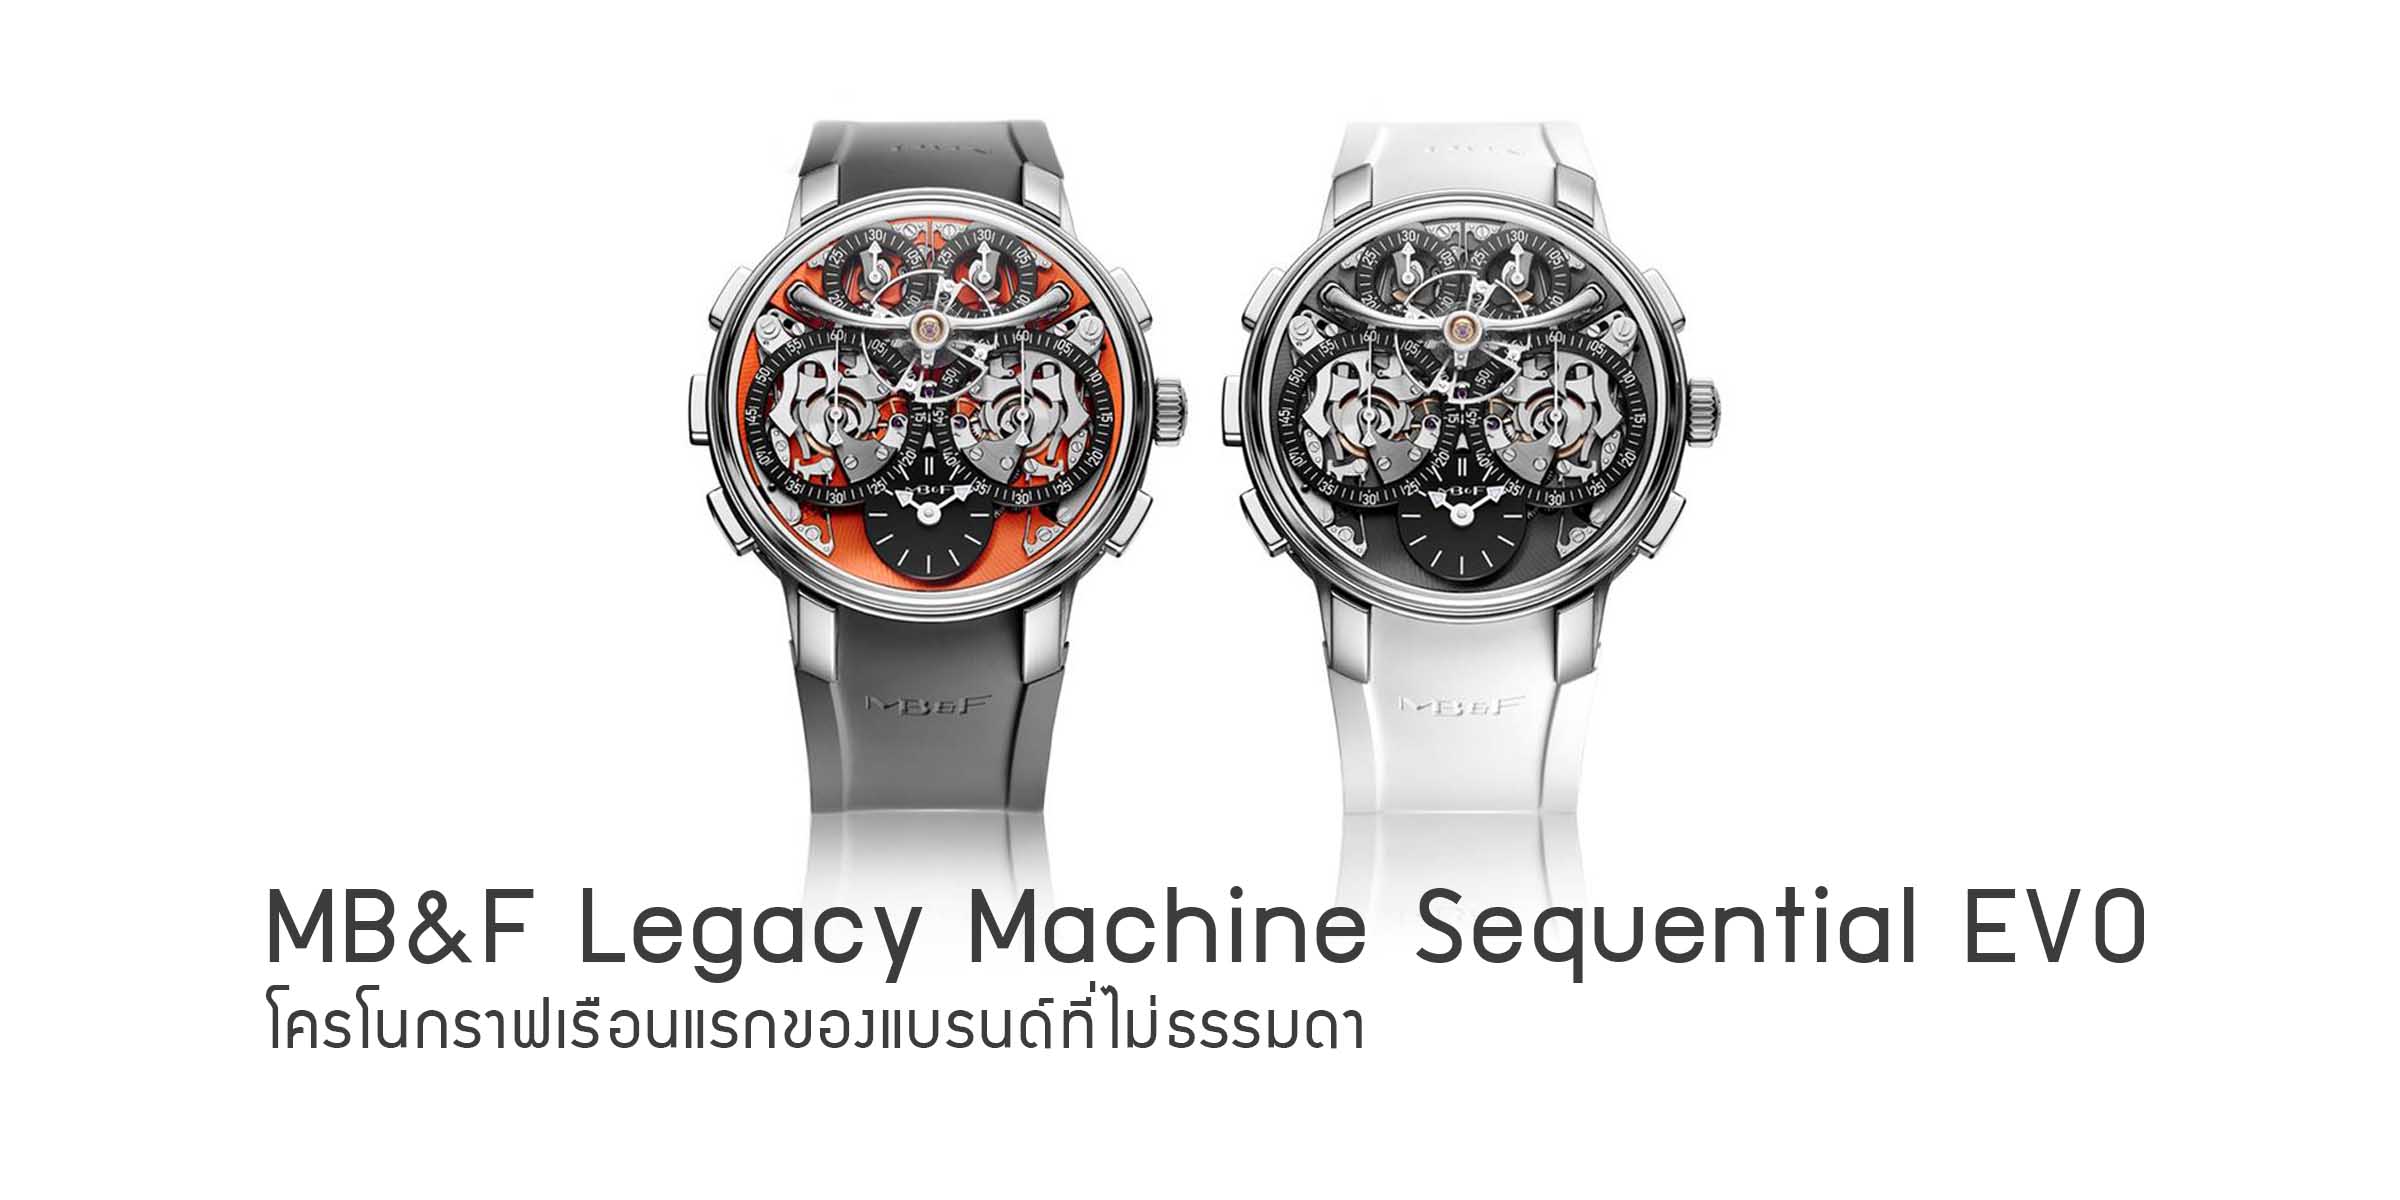 MB&F Legacy Machine Sequential EVO